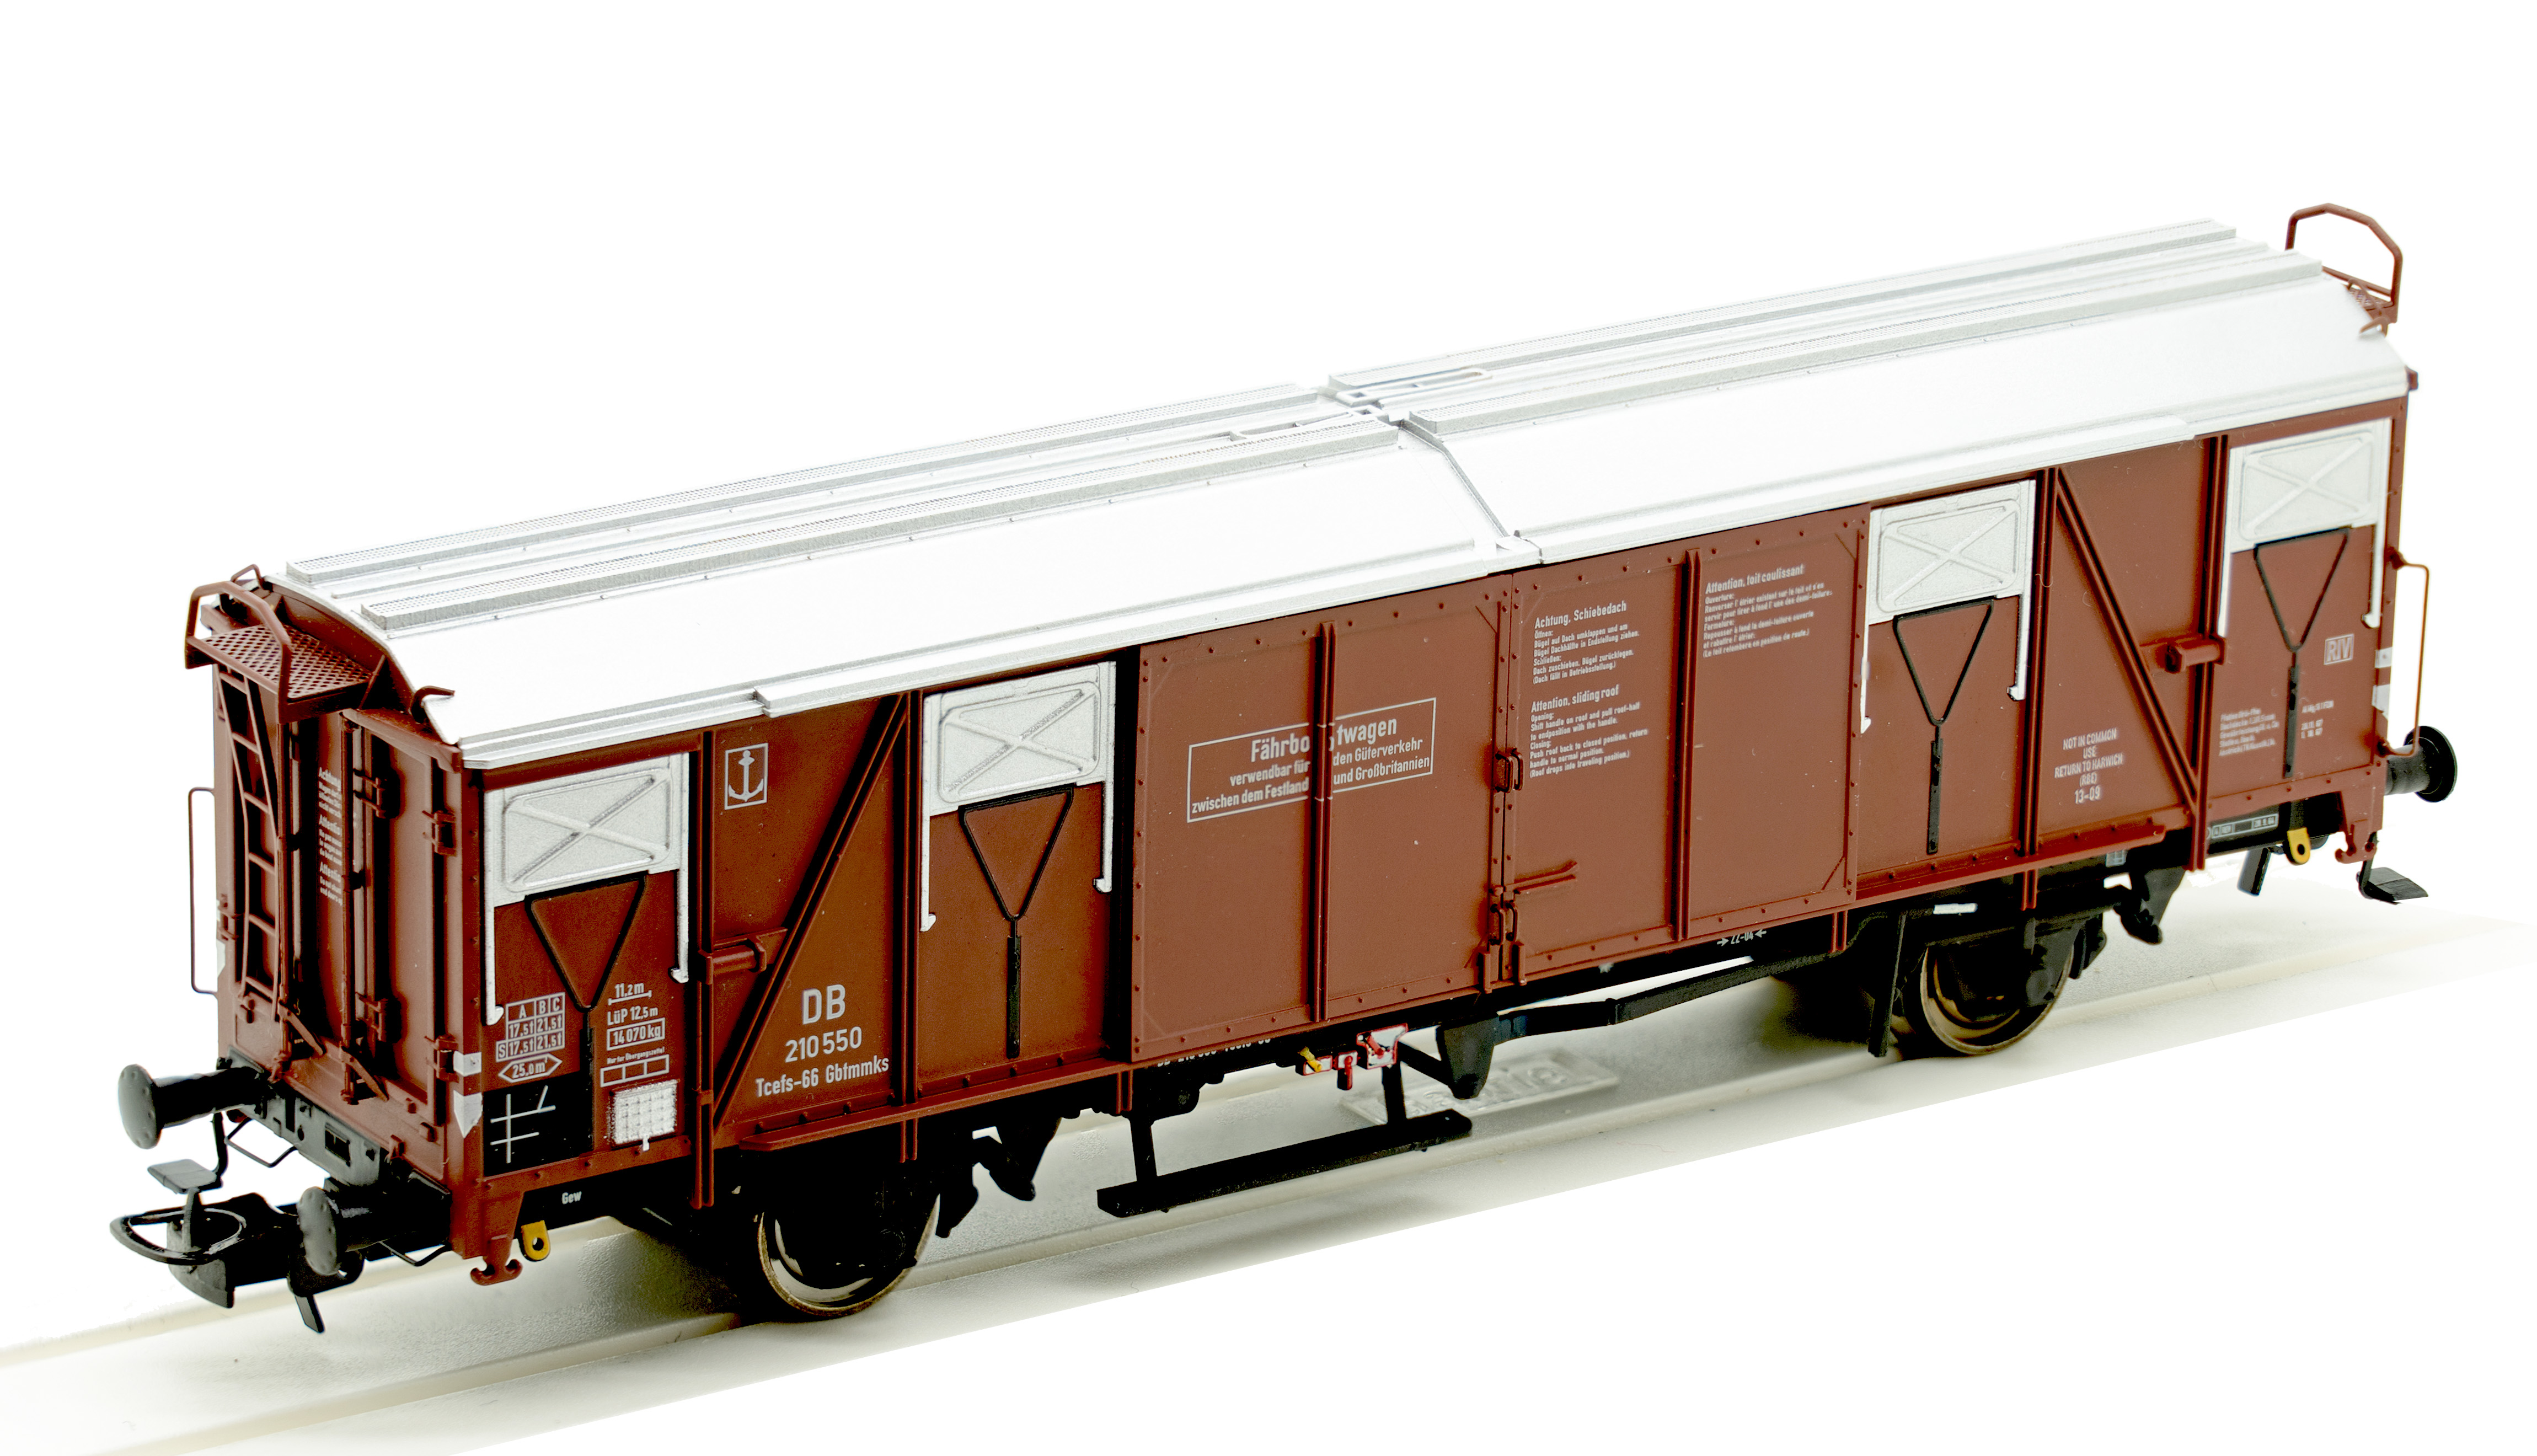 Gblmmks-61 von Modellbahn-Union DB Ep. III